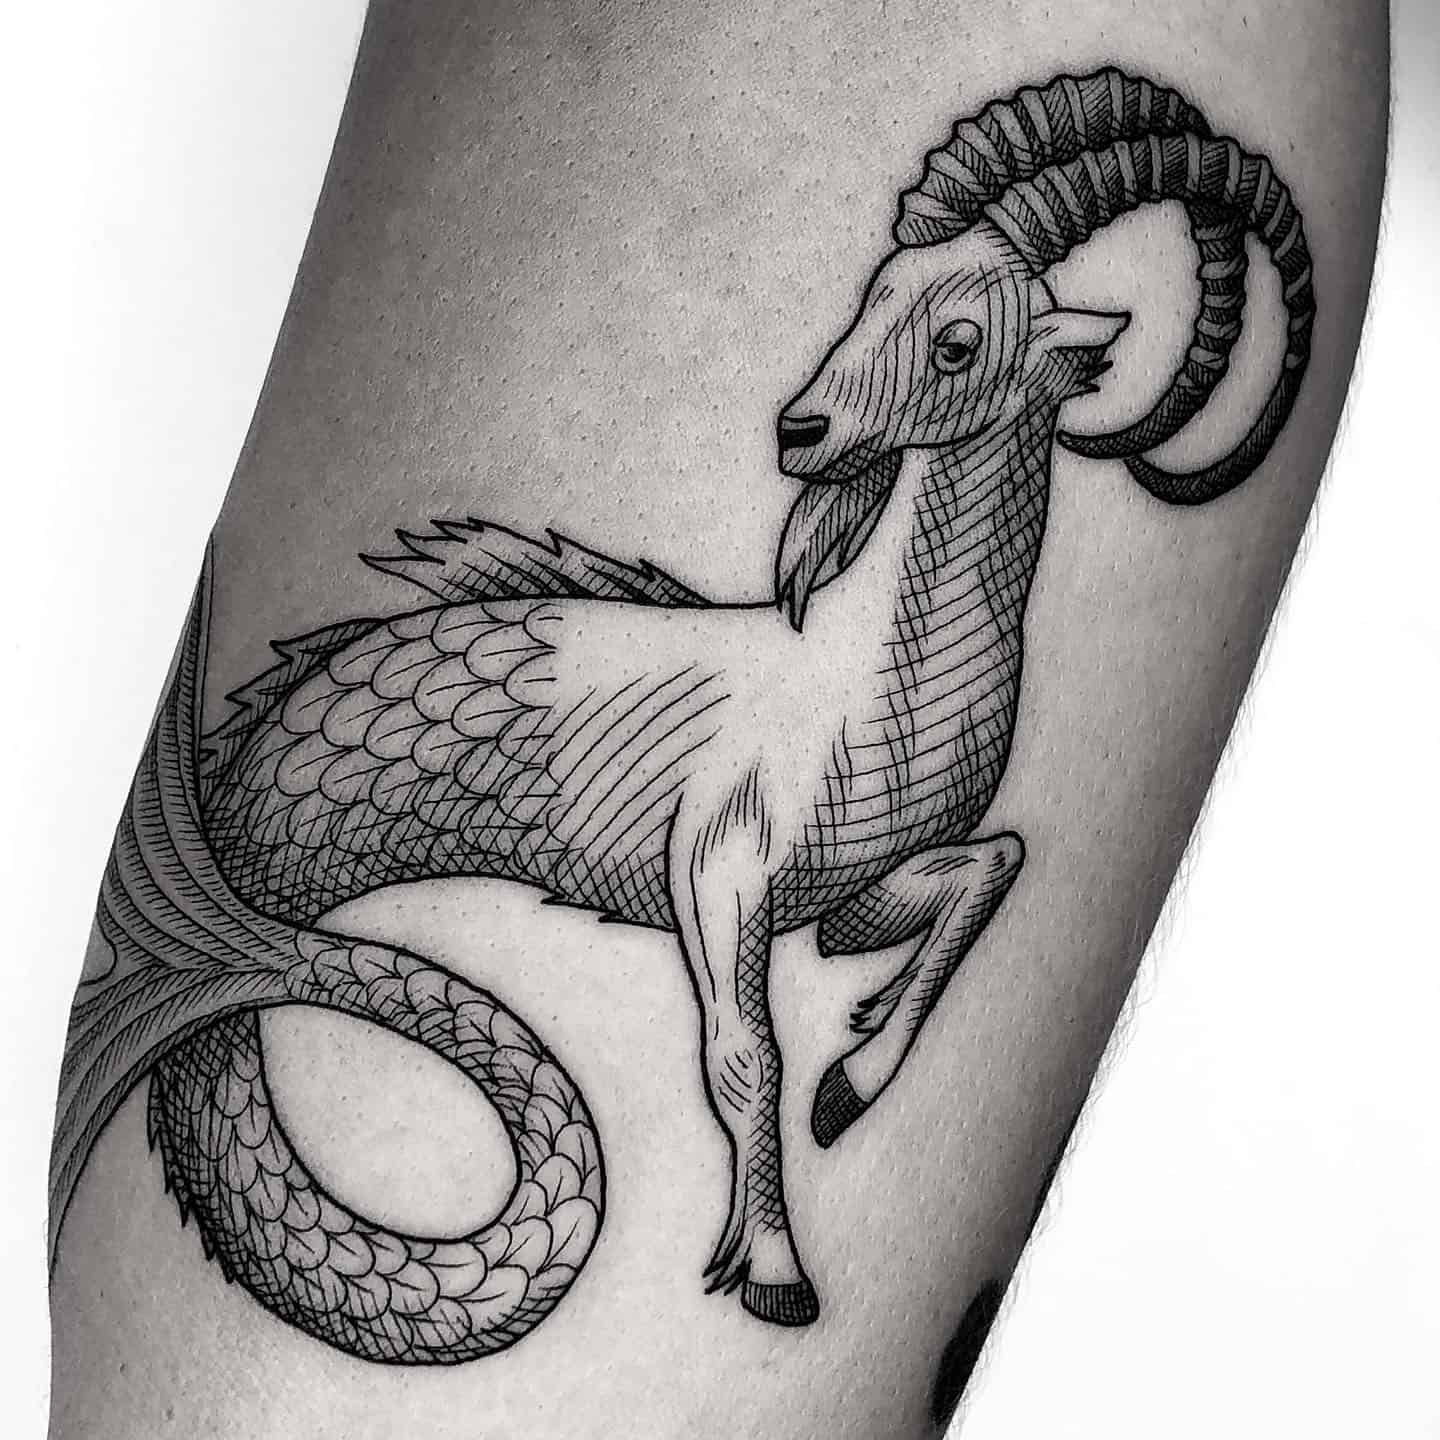 Capricon tattoo by donbraga